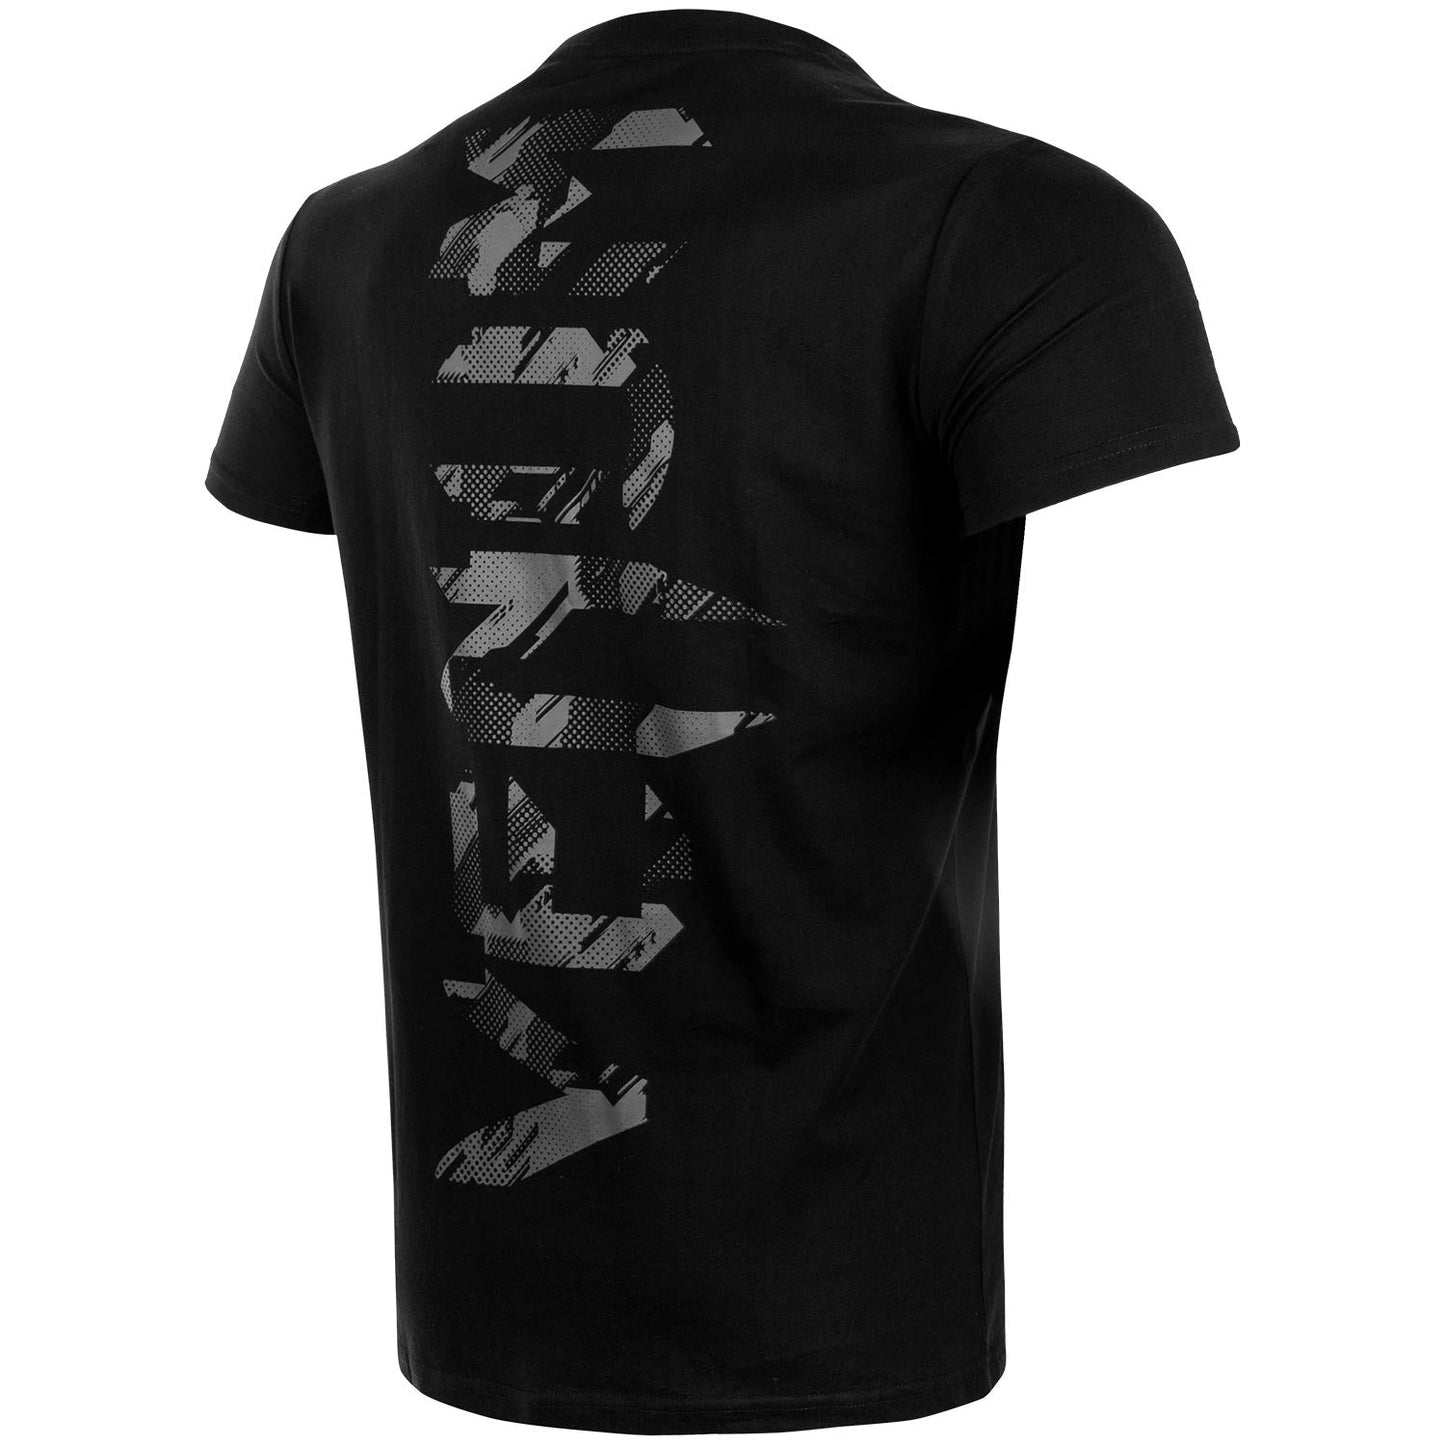 Venum Tecmo Giant T-shirt - Black/Grey